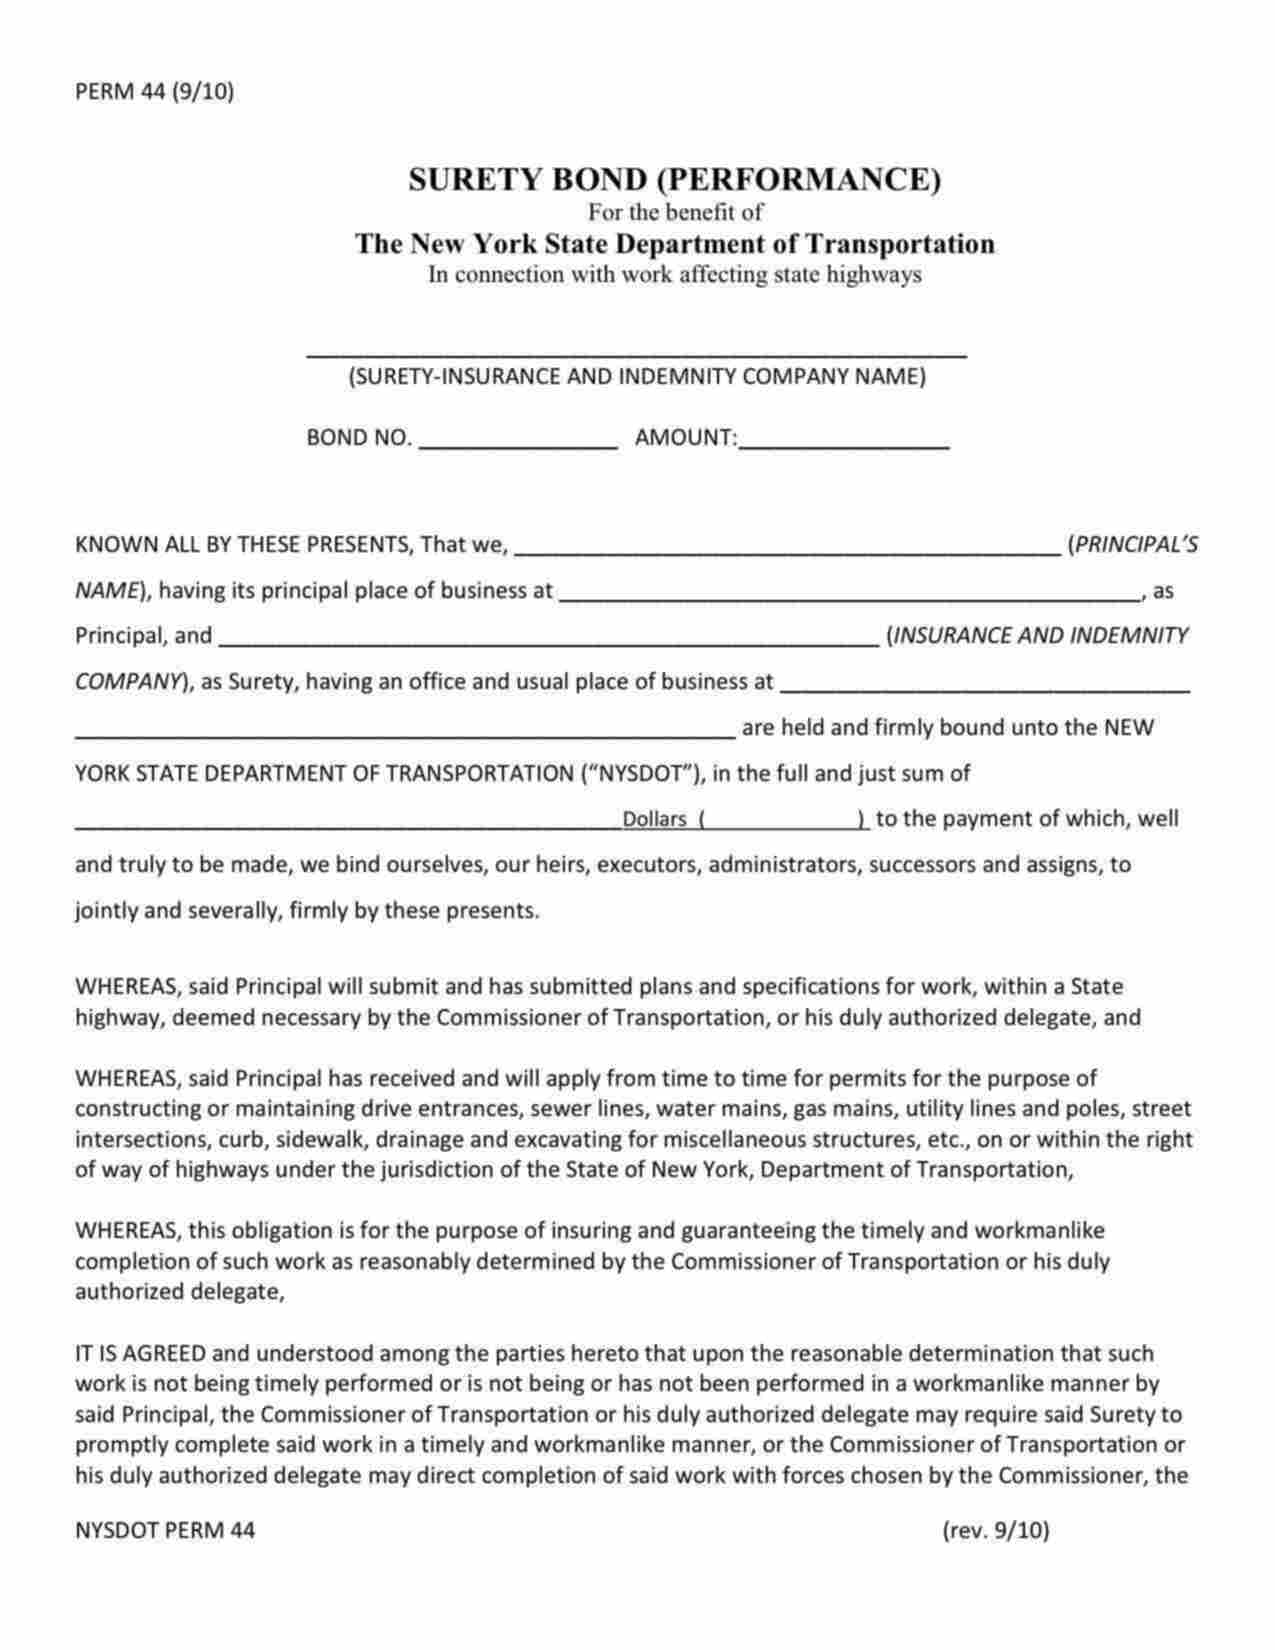 New York Highway Permit/ Encroachment Performance Bond Form